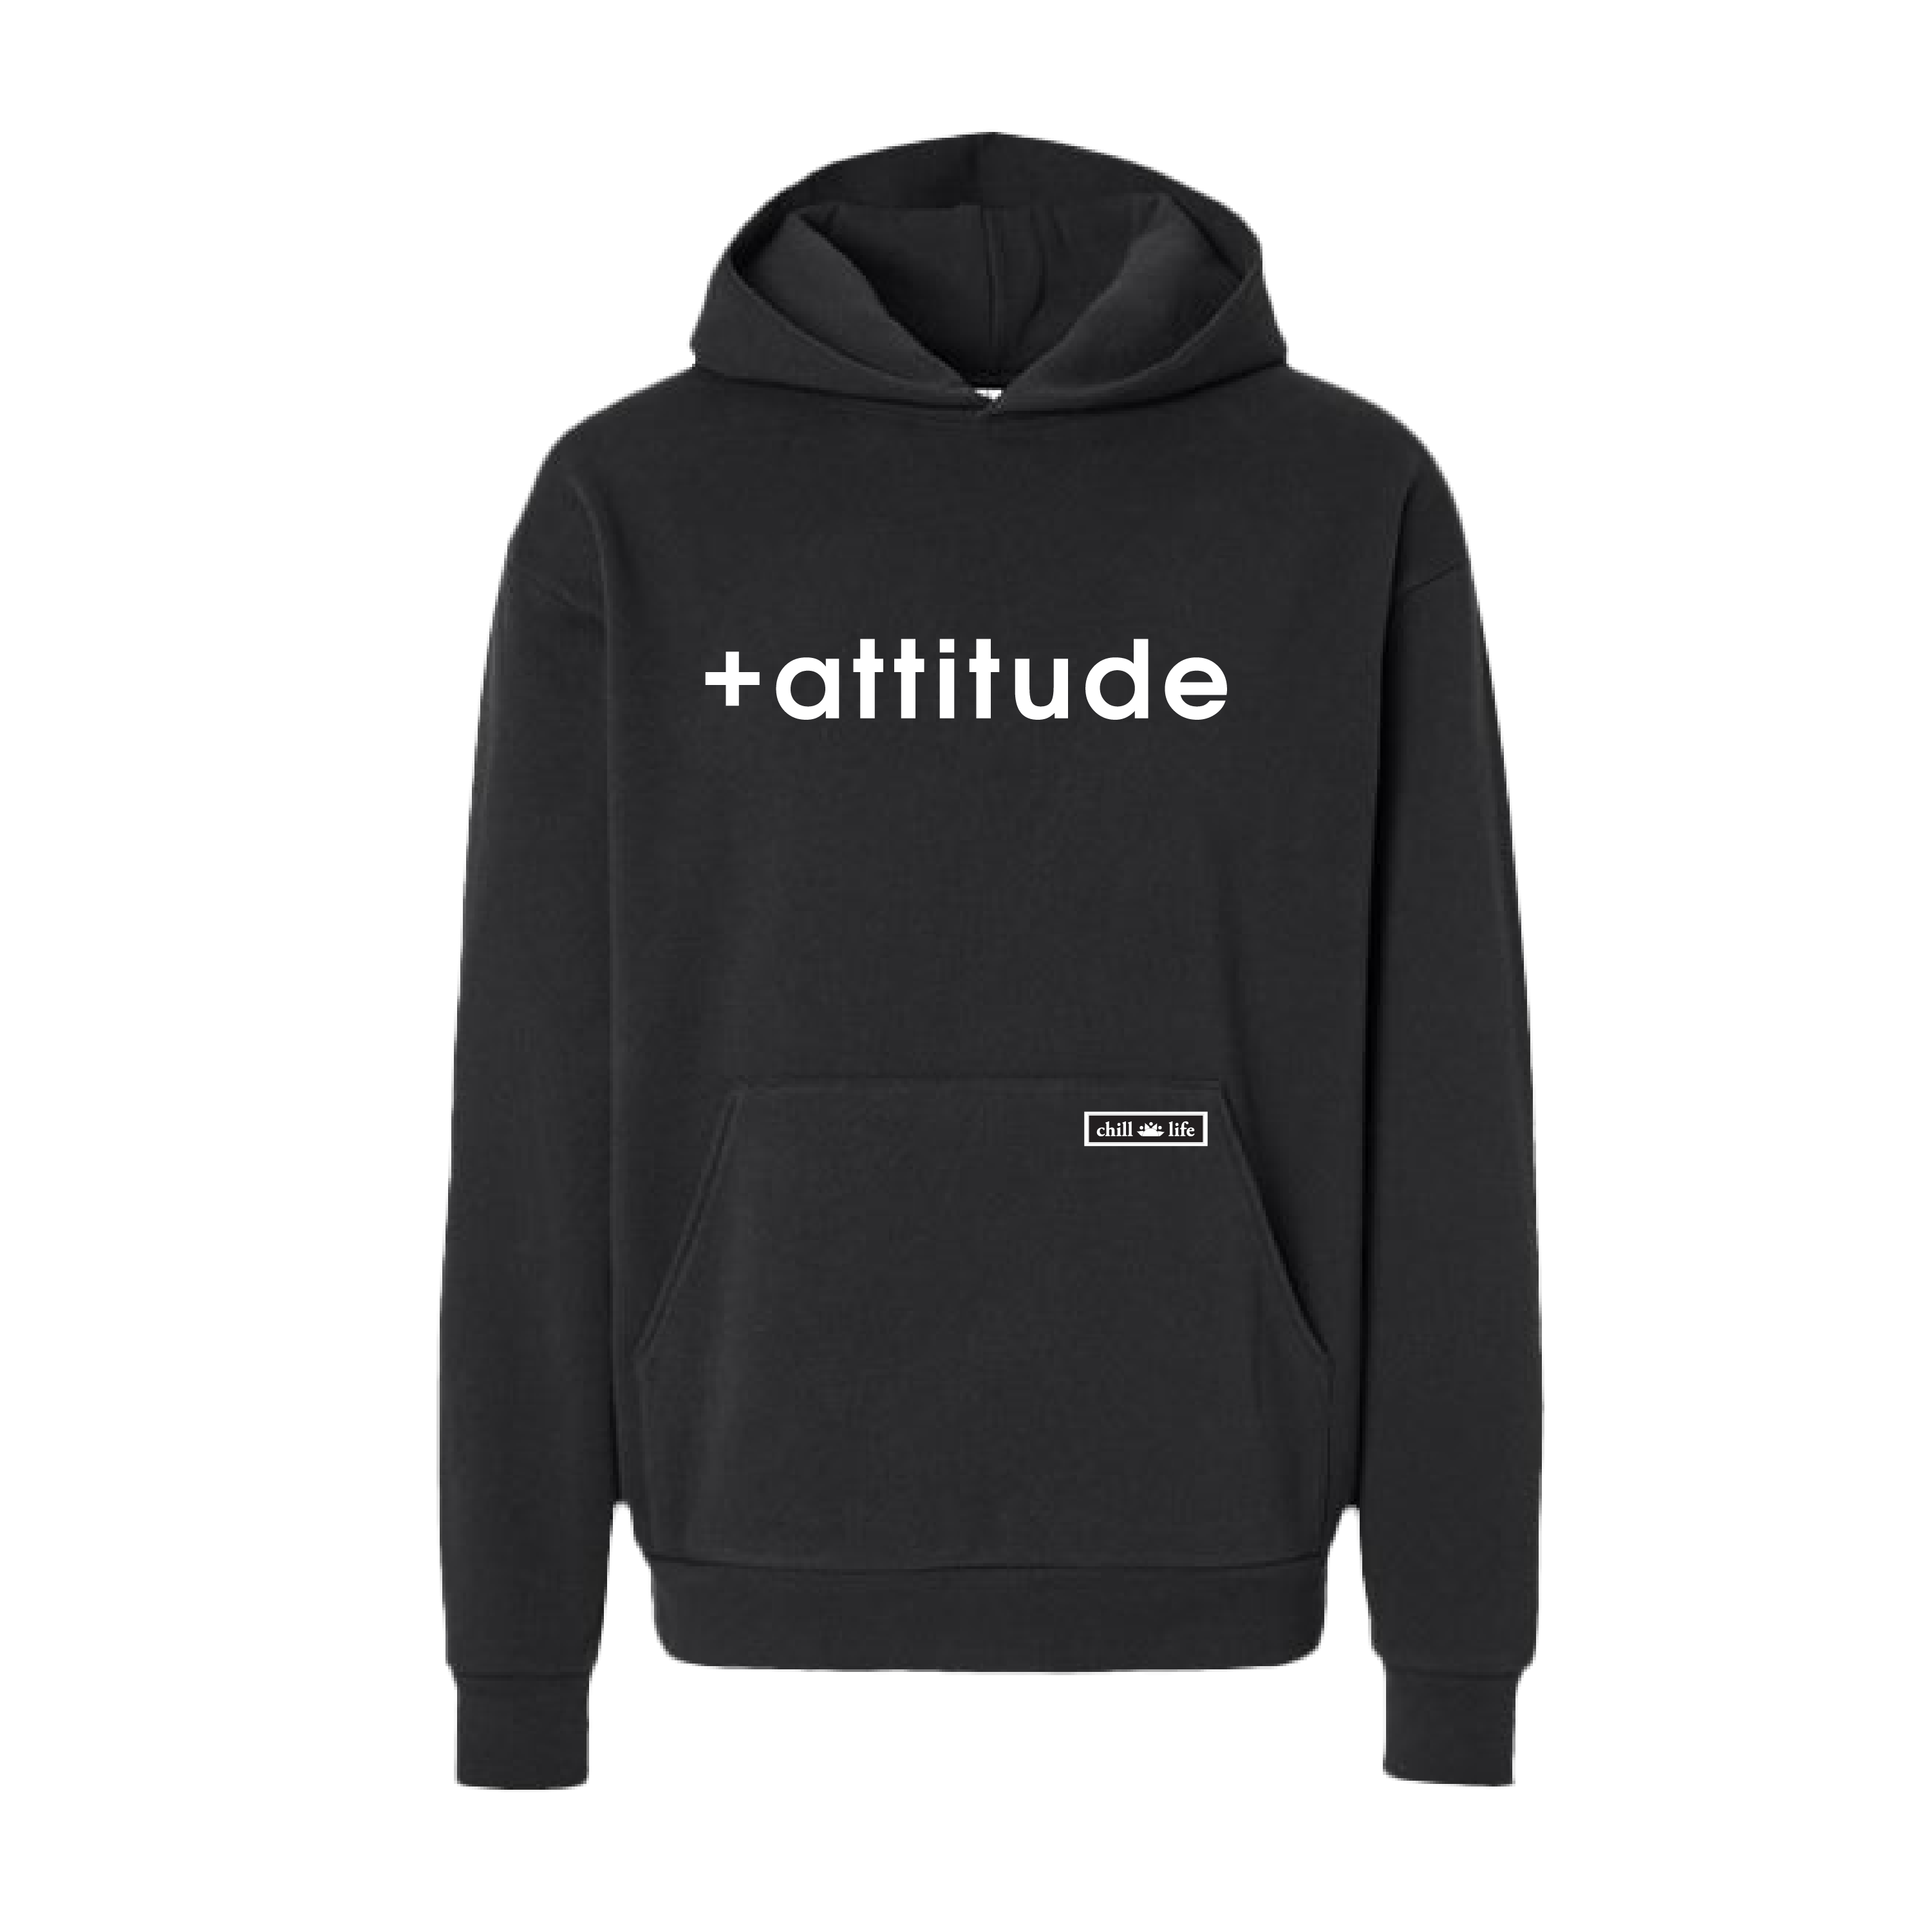 +attitude Hoodie - Black chill life style